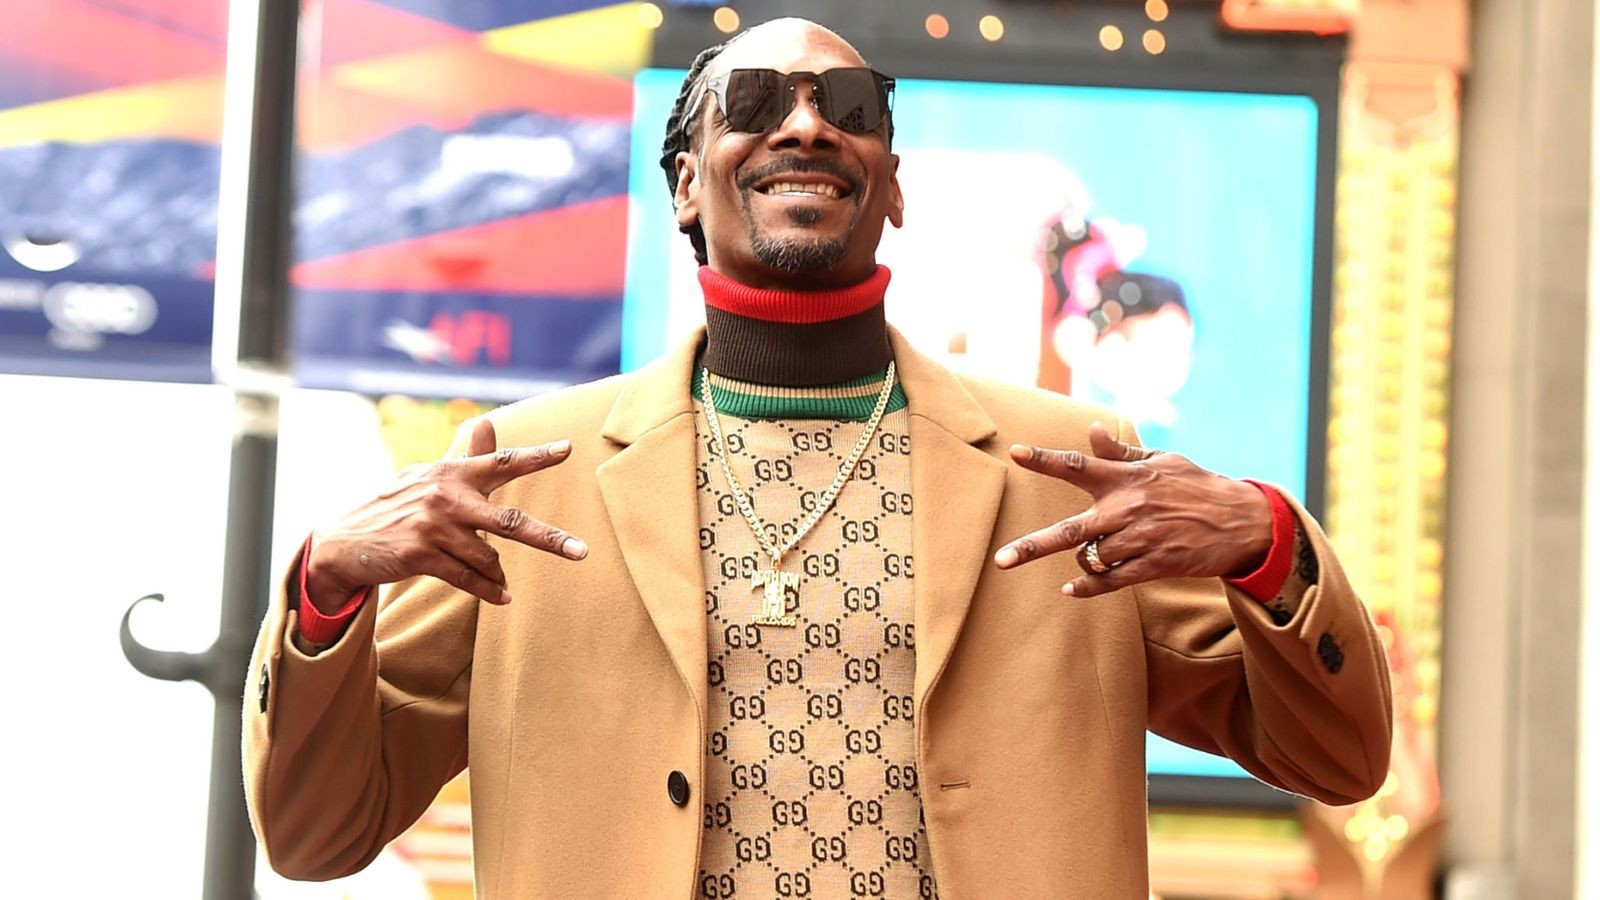 Snoop Dogg 2018